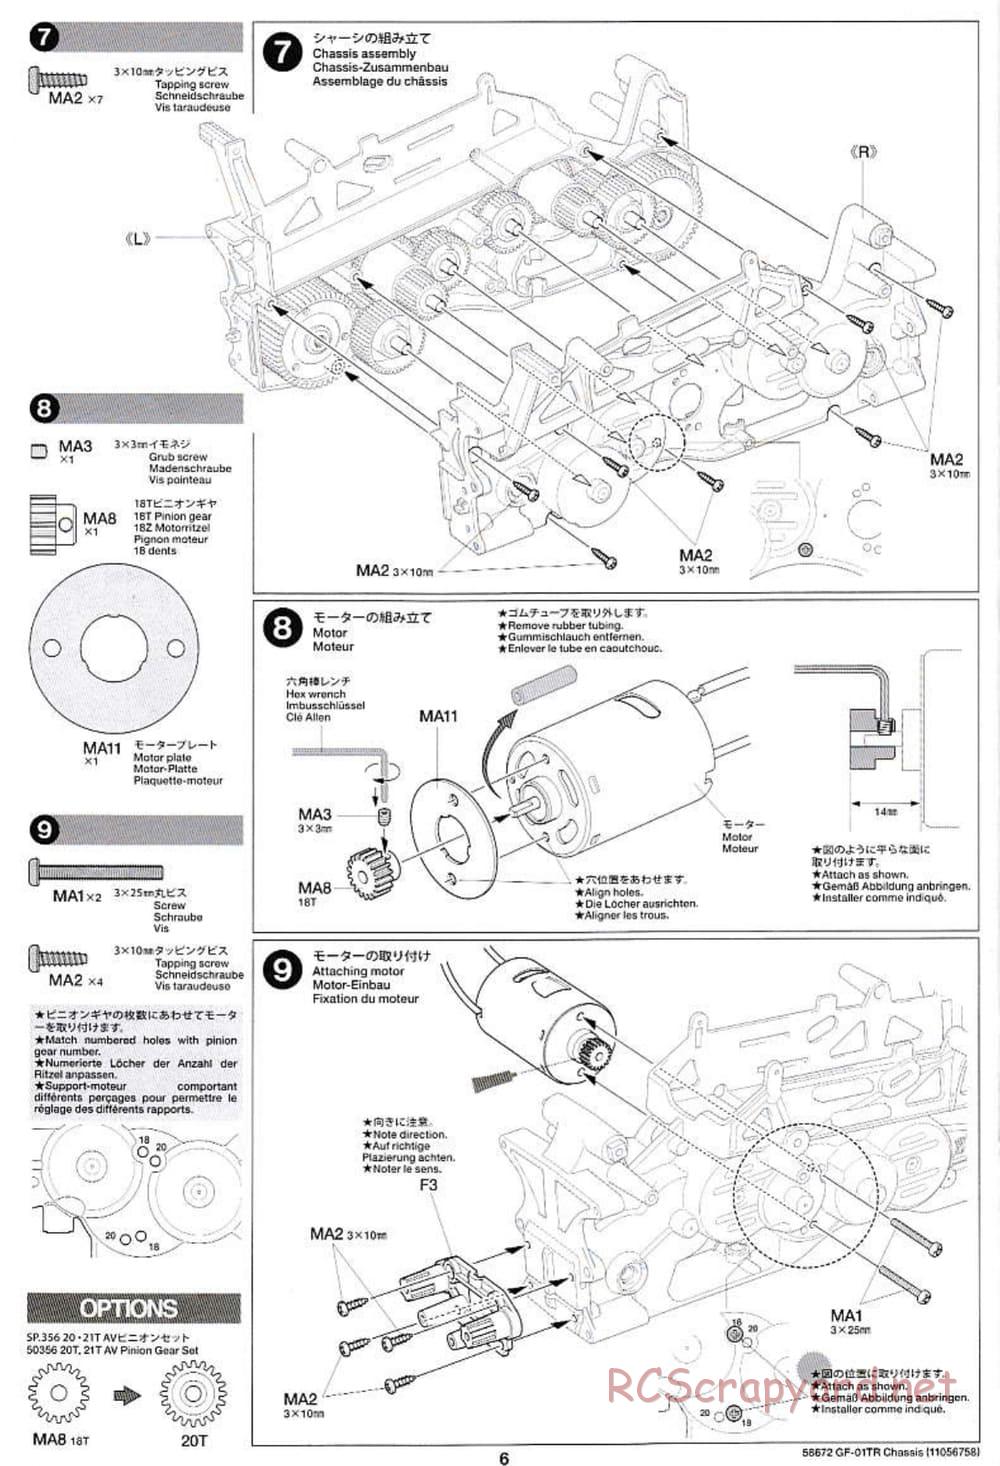 Tamiya - Monster Beetle Trail - GF-01TR Chassis - Manual - Page 6